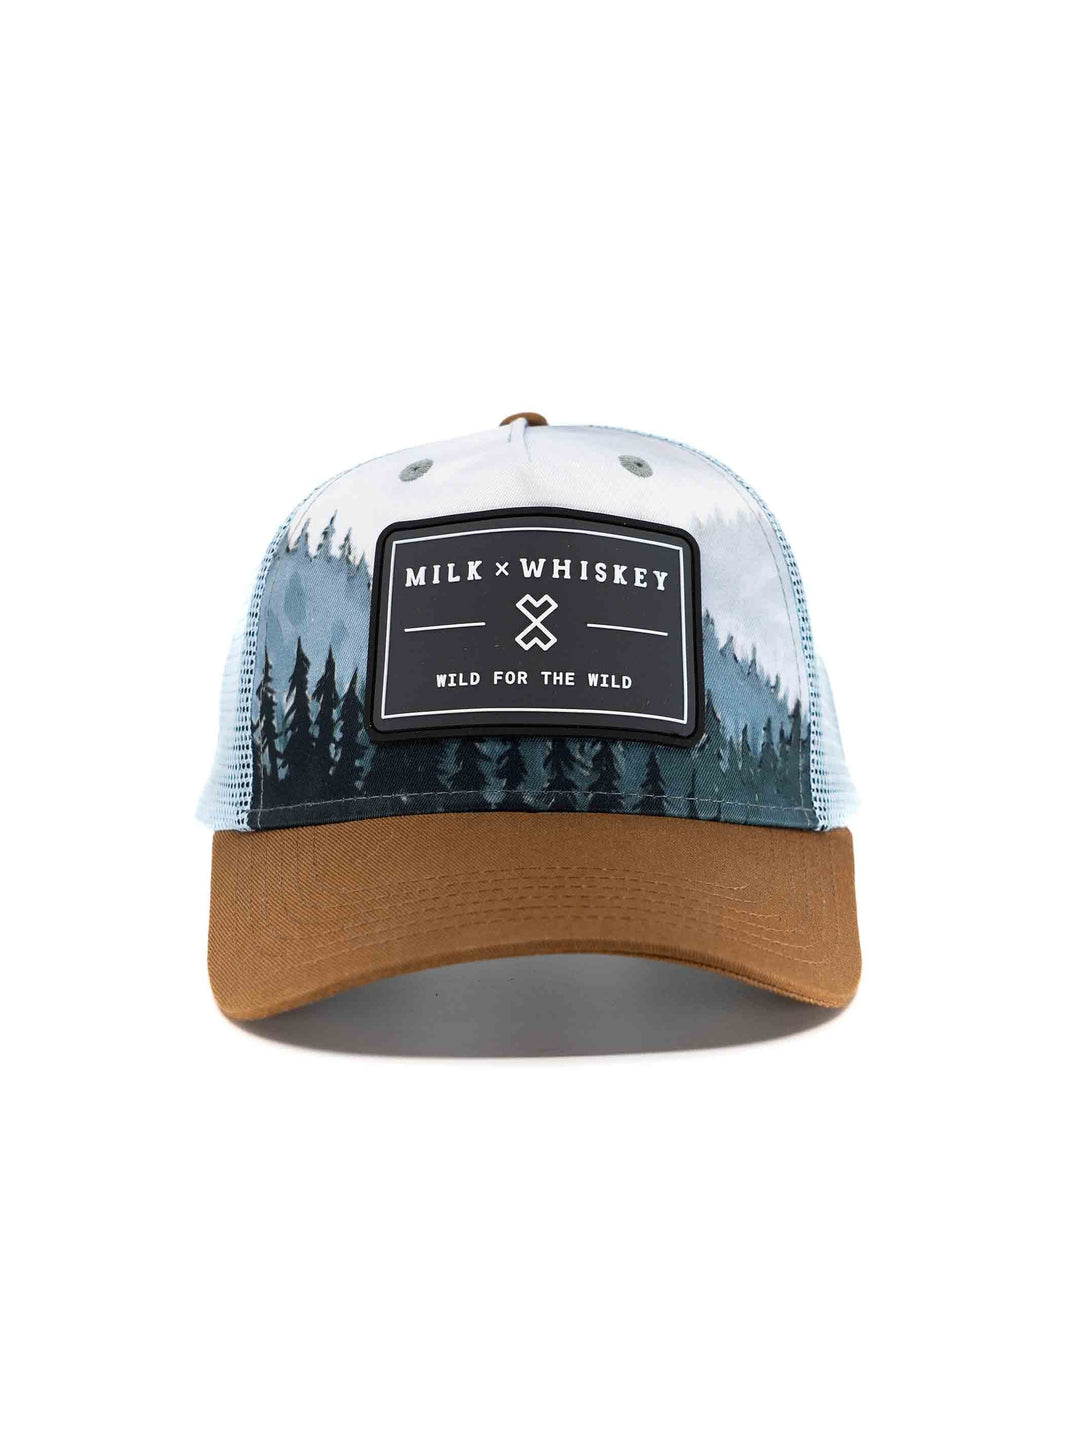 Milk x Whiskey  Outdoor Adventure Hats